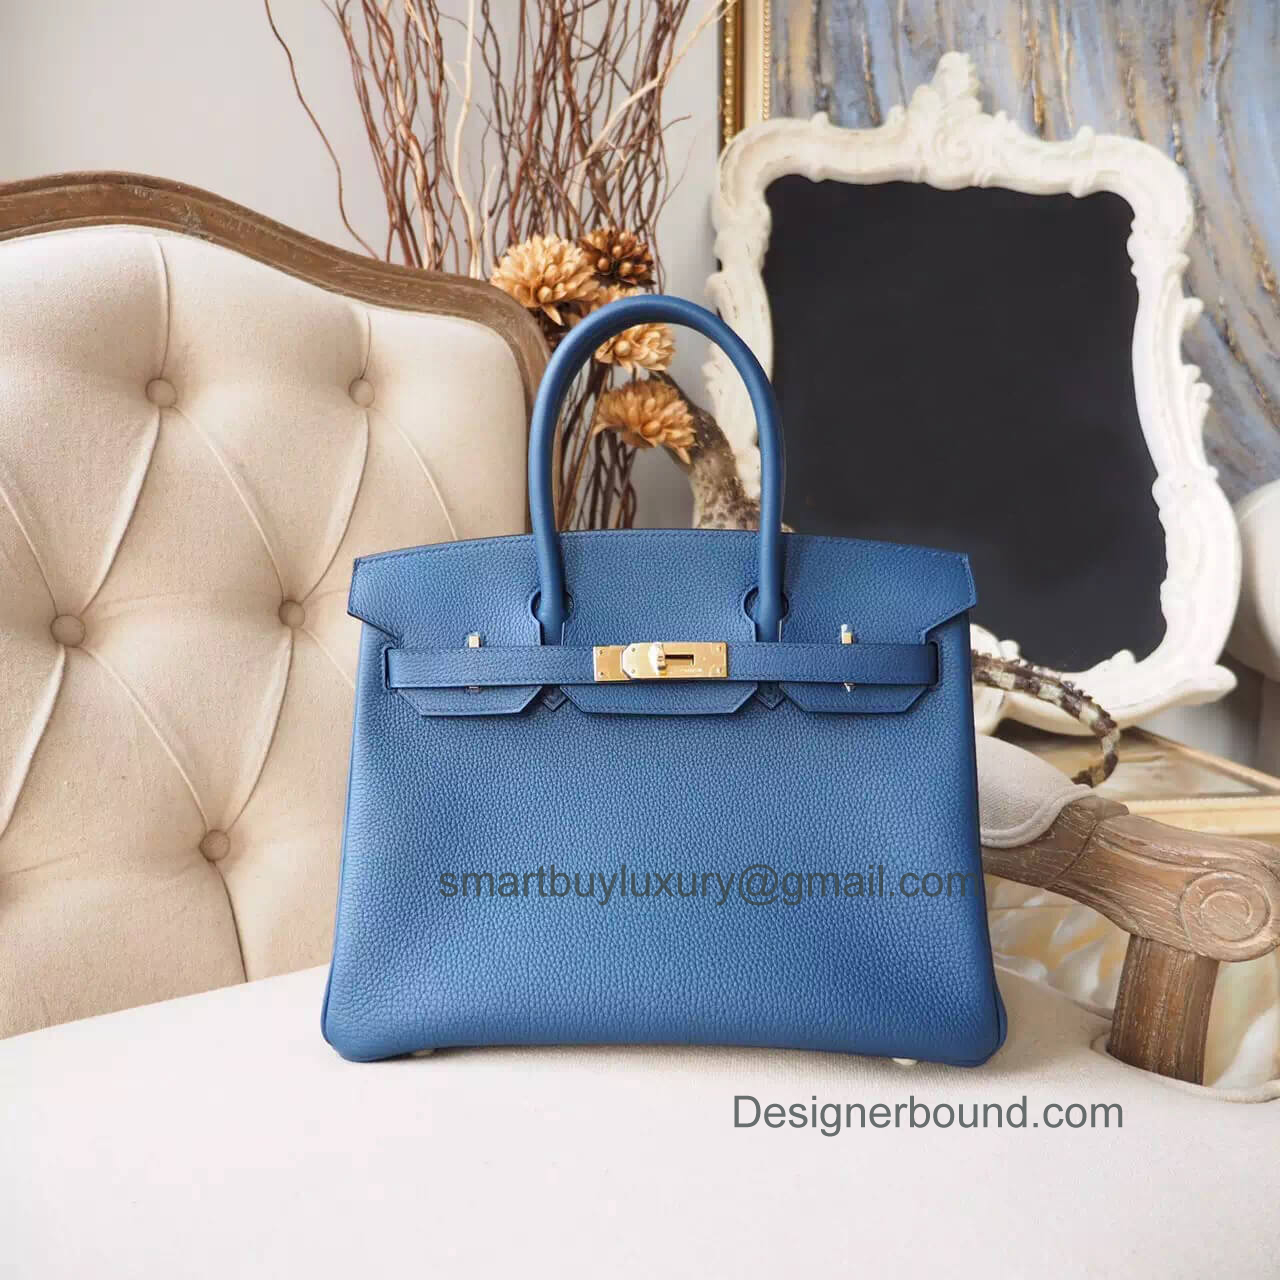 Hermes Birkin 30 Handbag in r2 Blue Agate Togo GHW